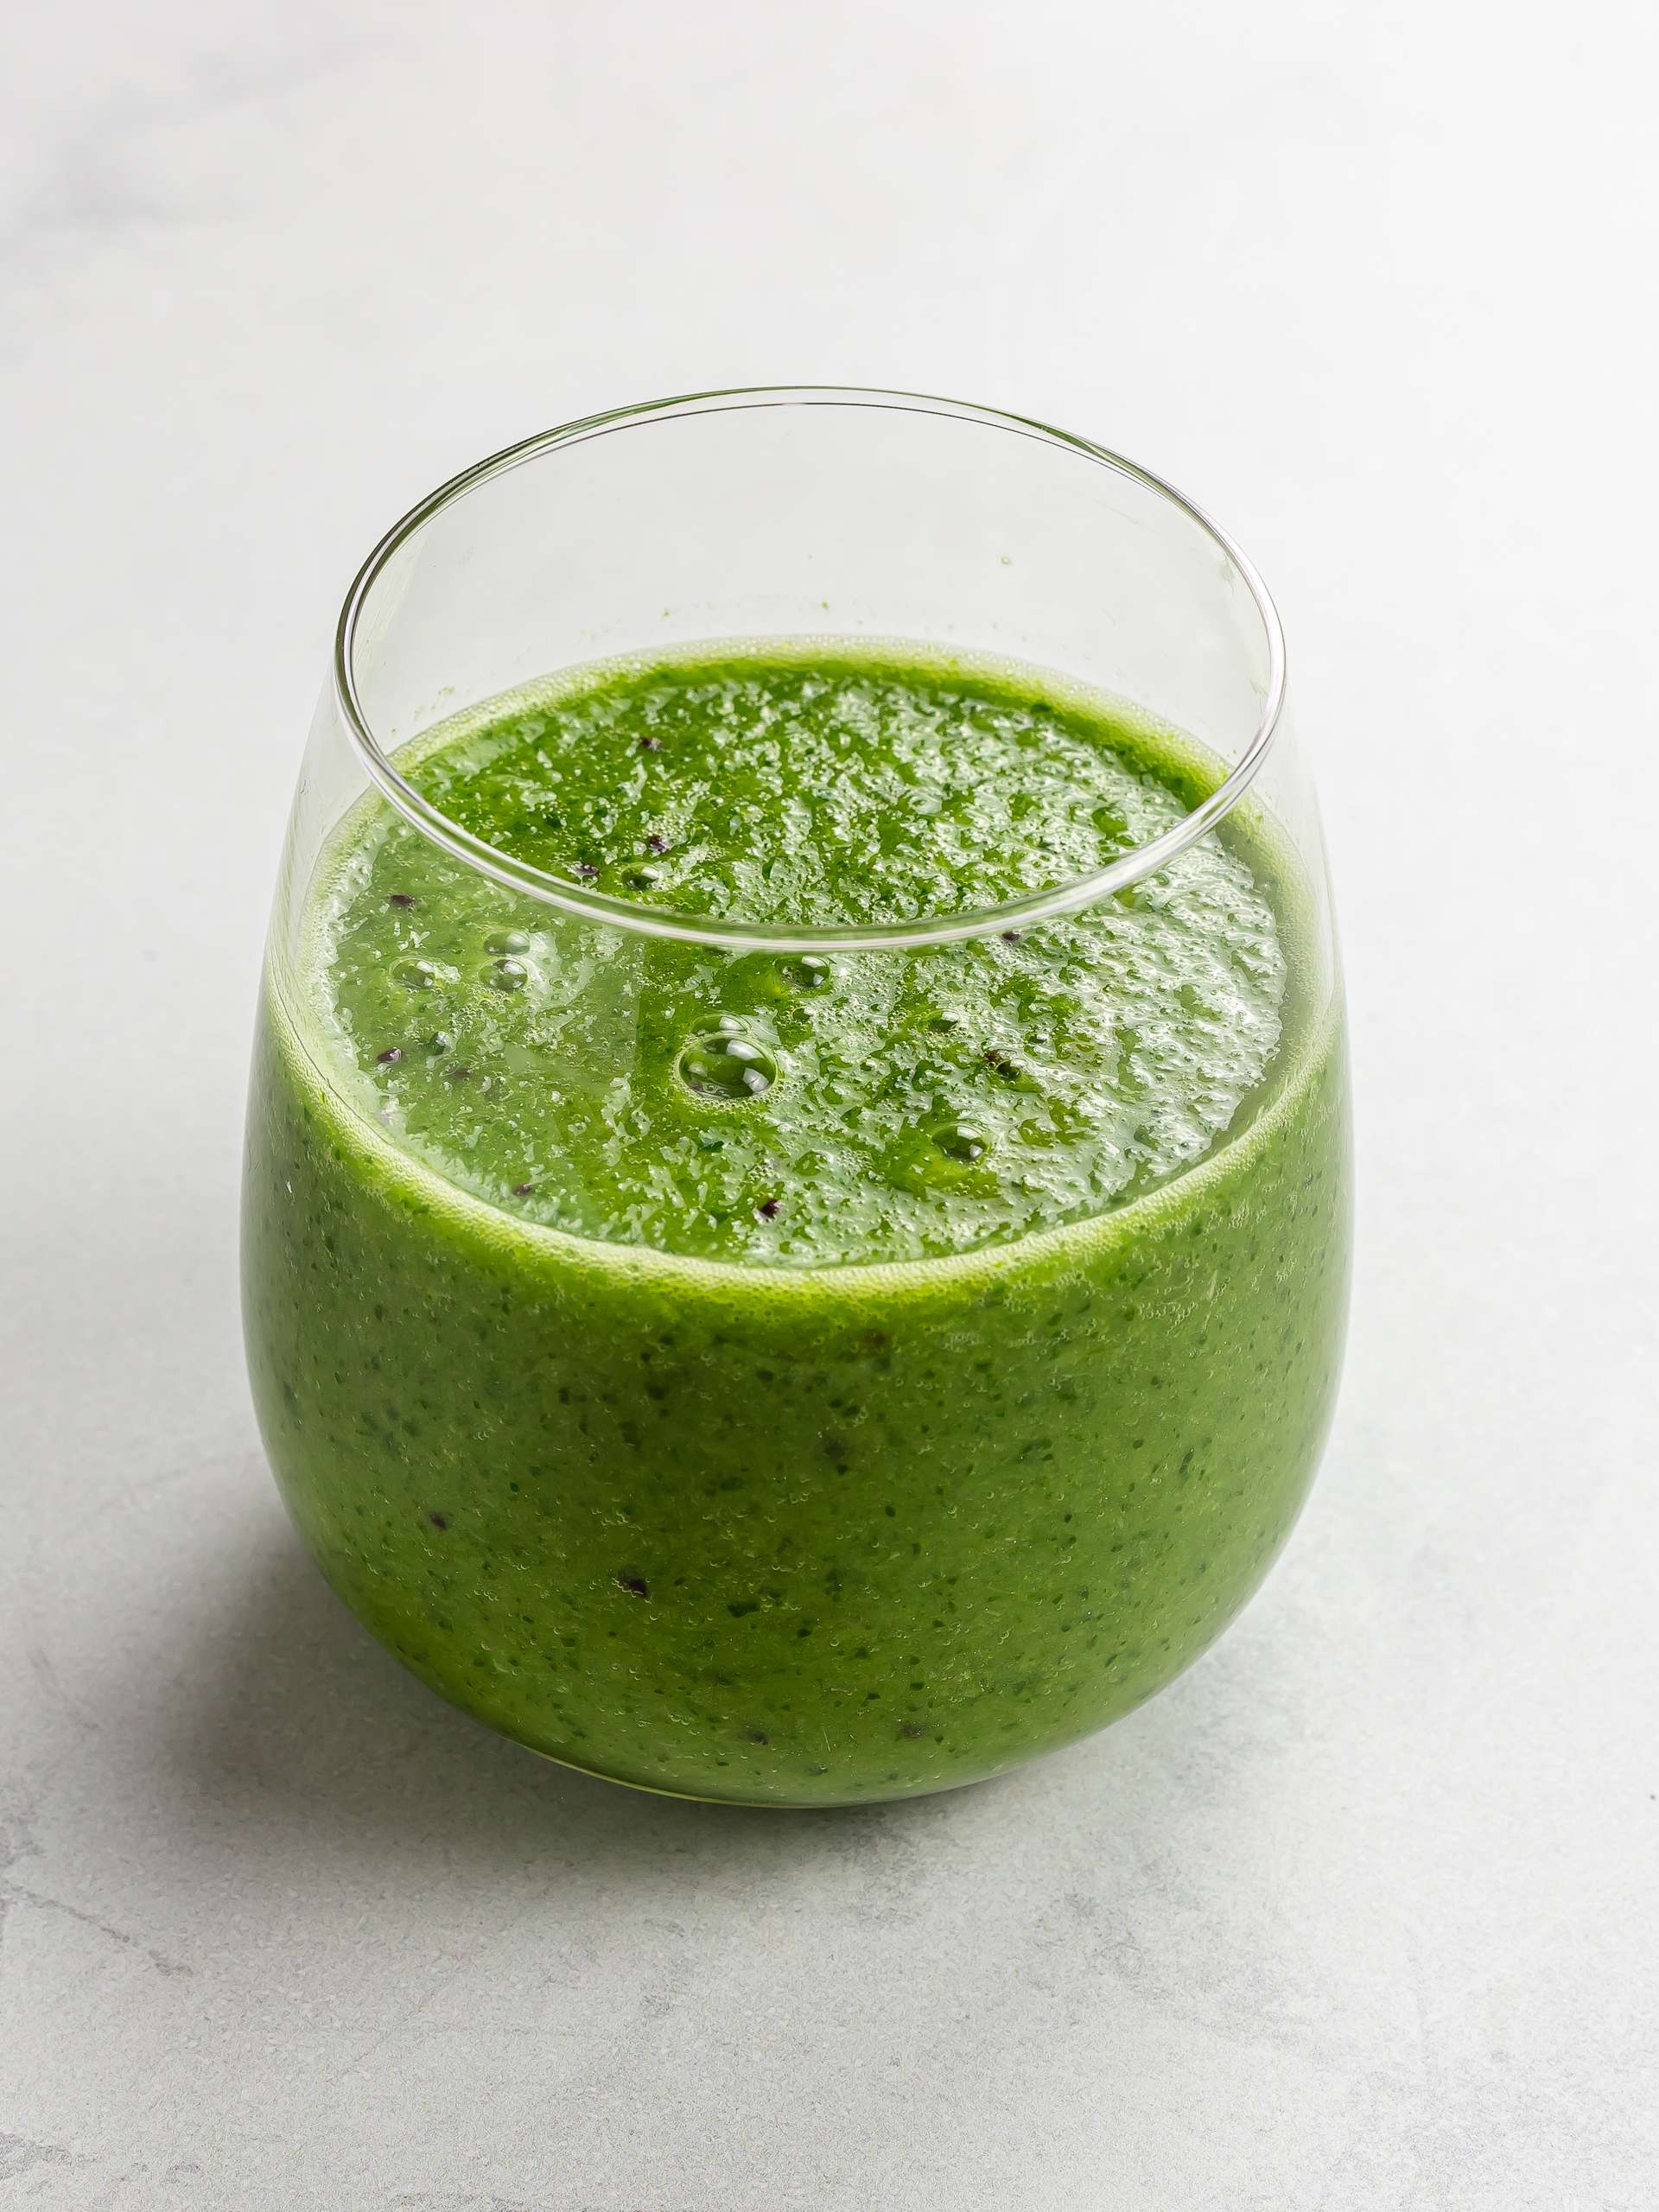 alkaline green smoothie in a glass